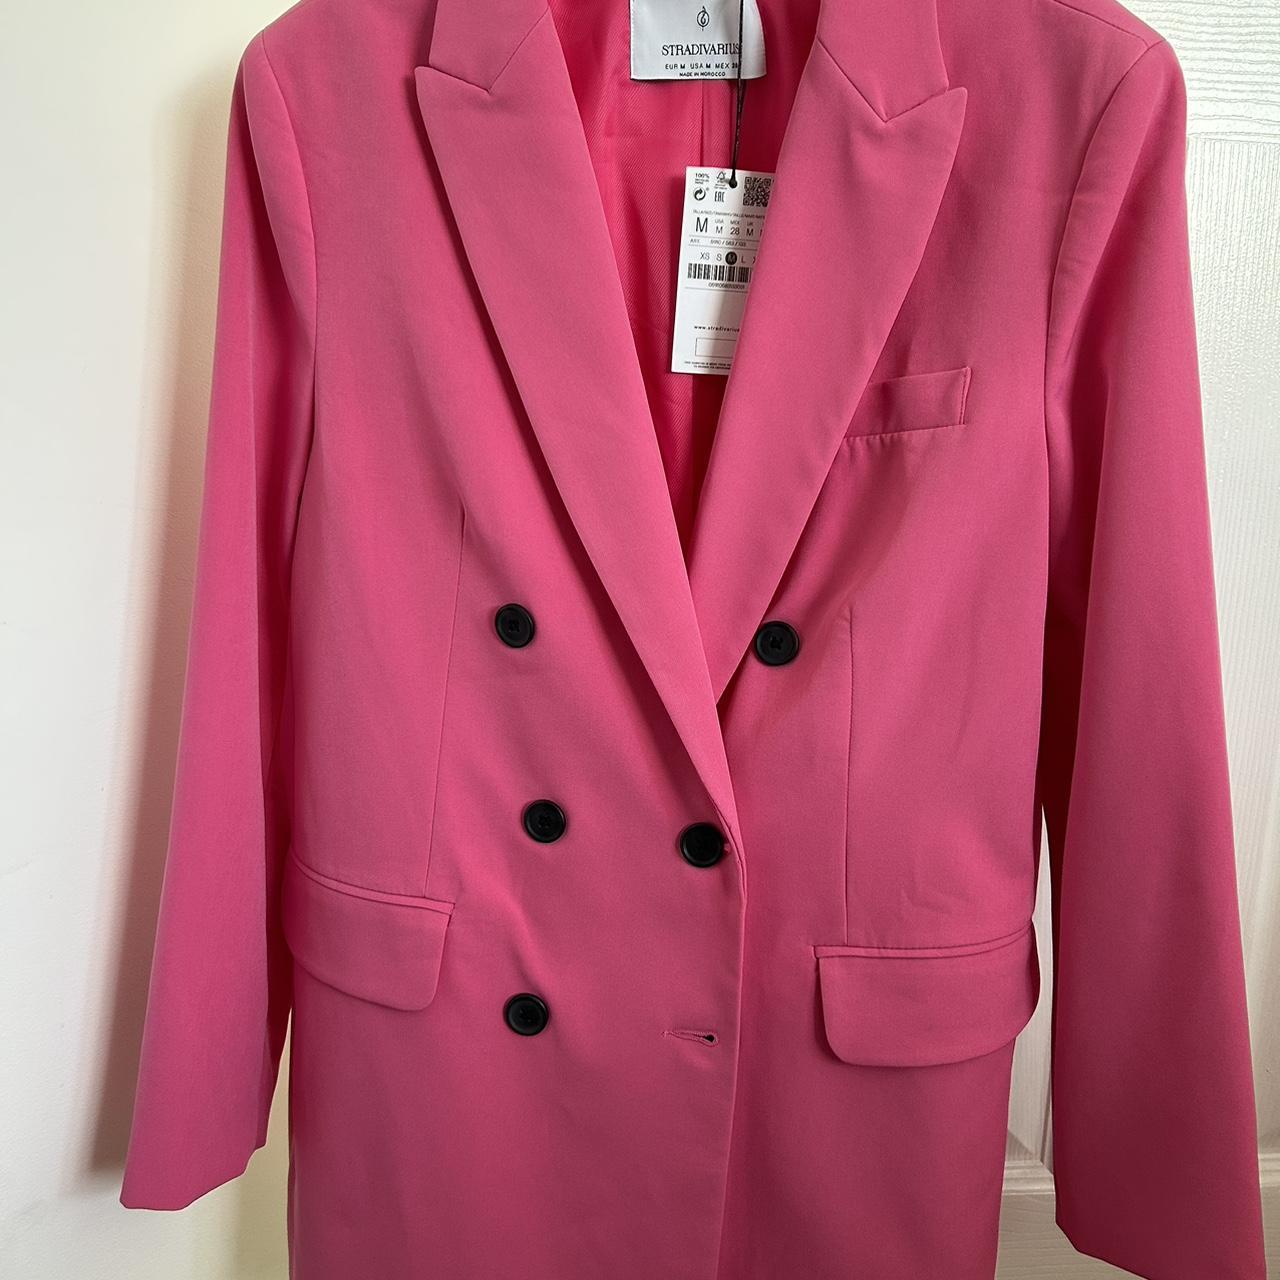 Stradivarius Women's Pink and Black Tailored-jackets | Depop